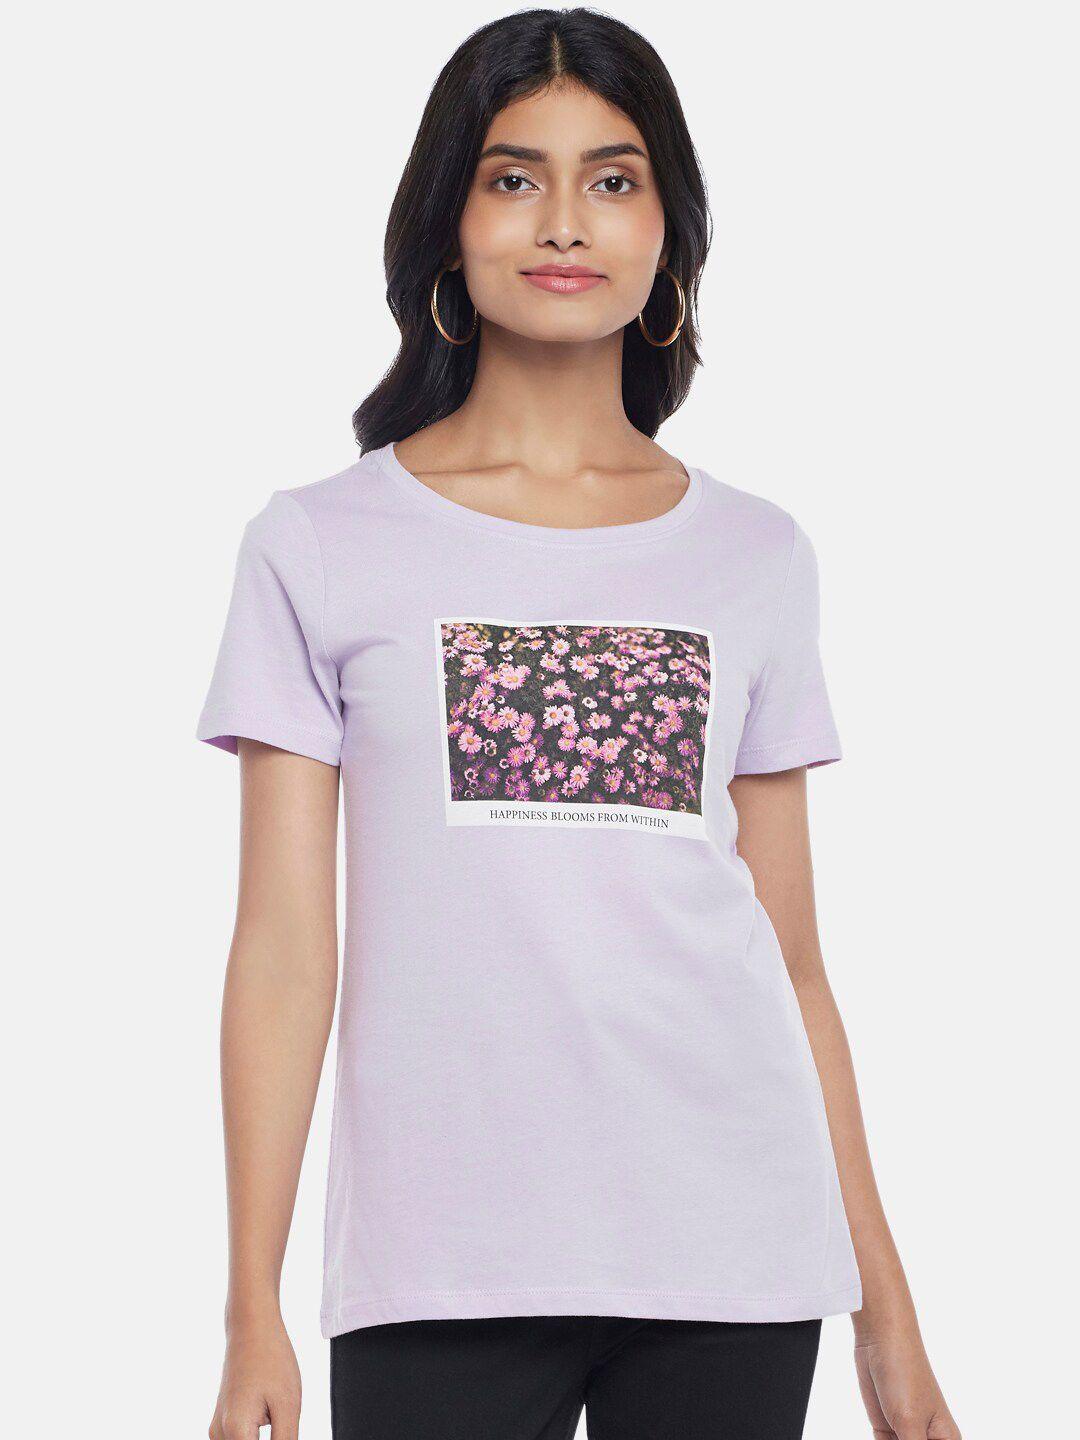 honey by pantaloons women purple floral print t-shirt